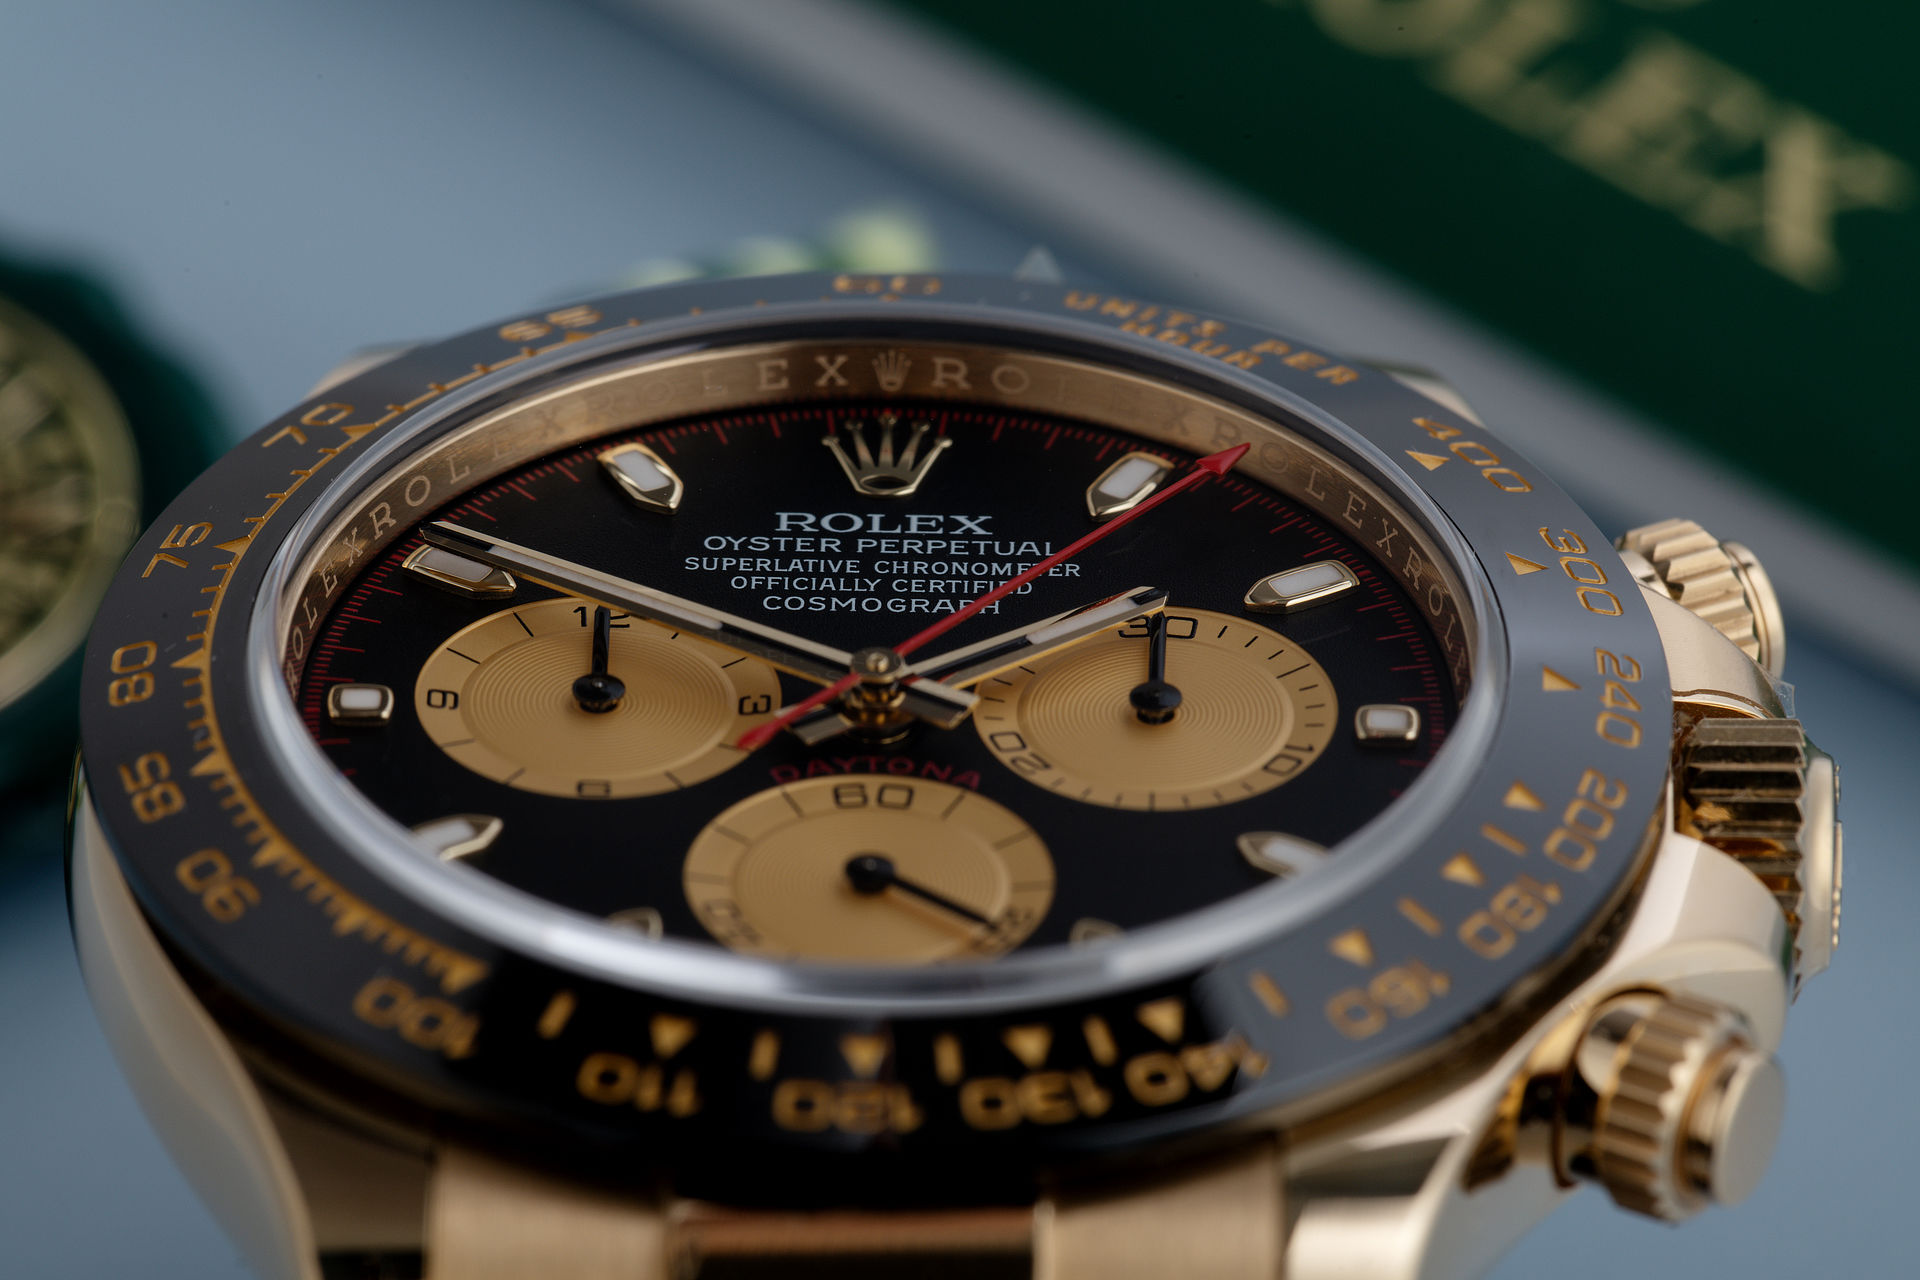 ref 116518LN | Brand New '5 Year Rolex Warranty' | Rolex Cosmograph Daytona